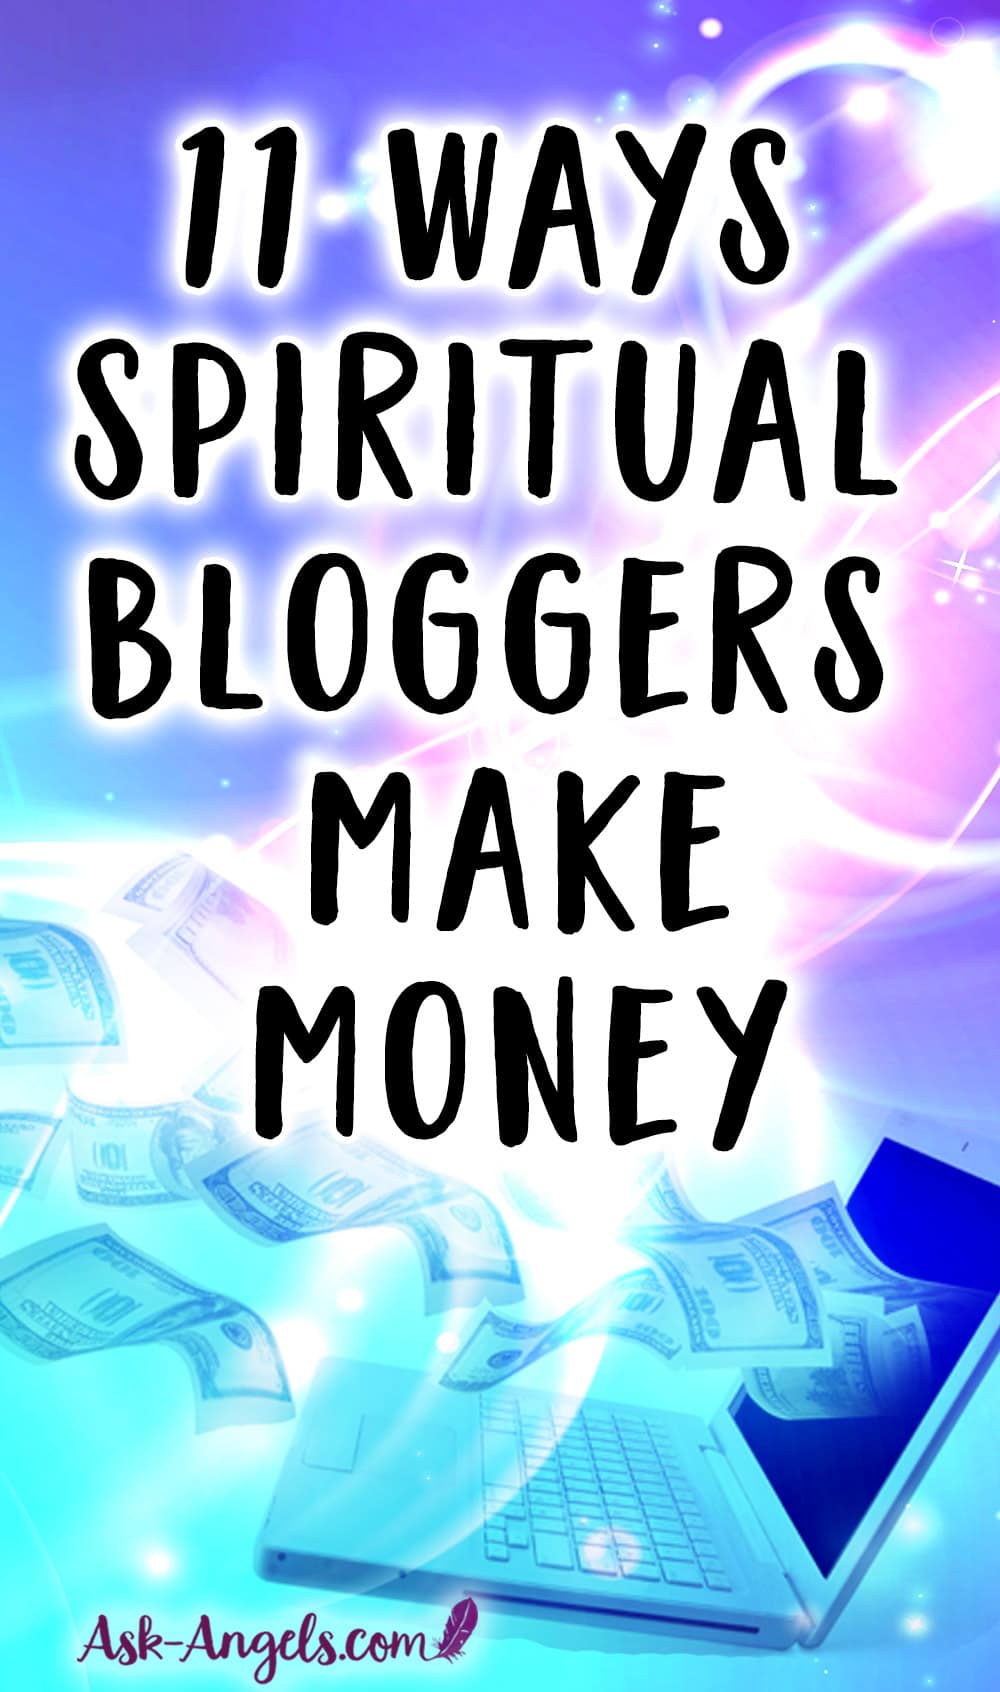 11 Ways Spiritual Bloggers Make Money